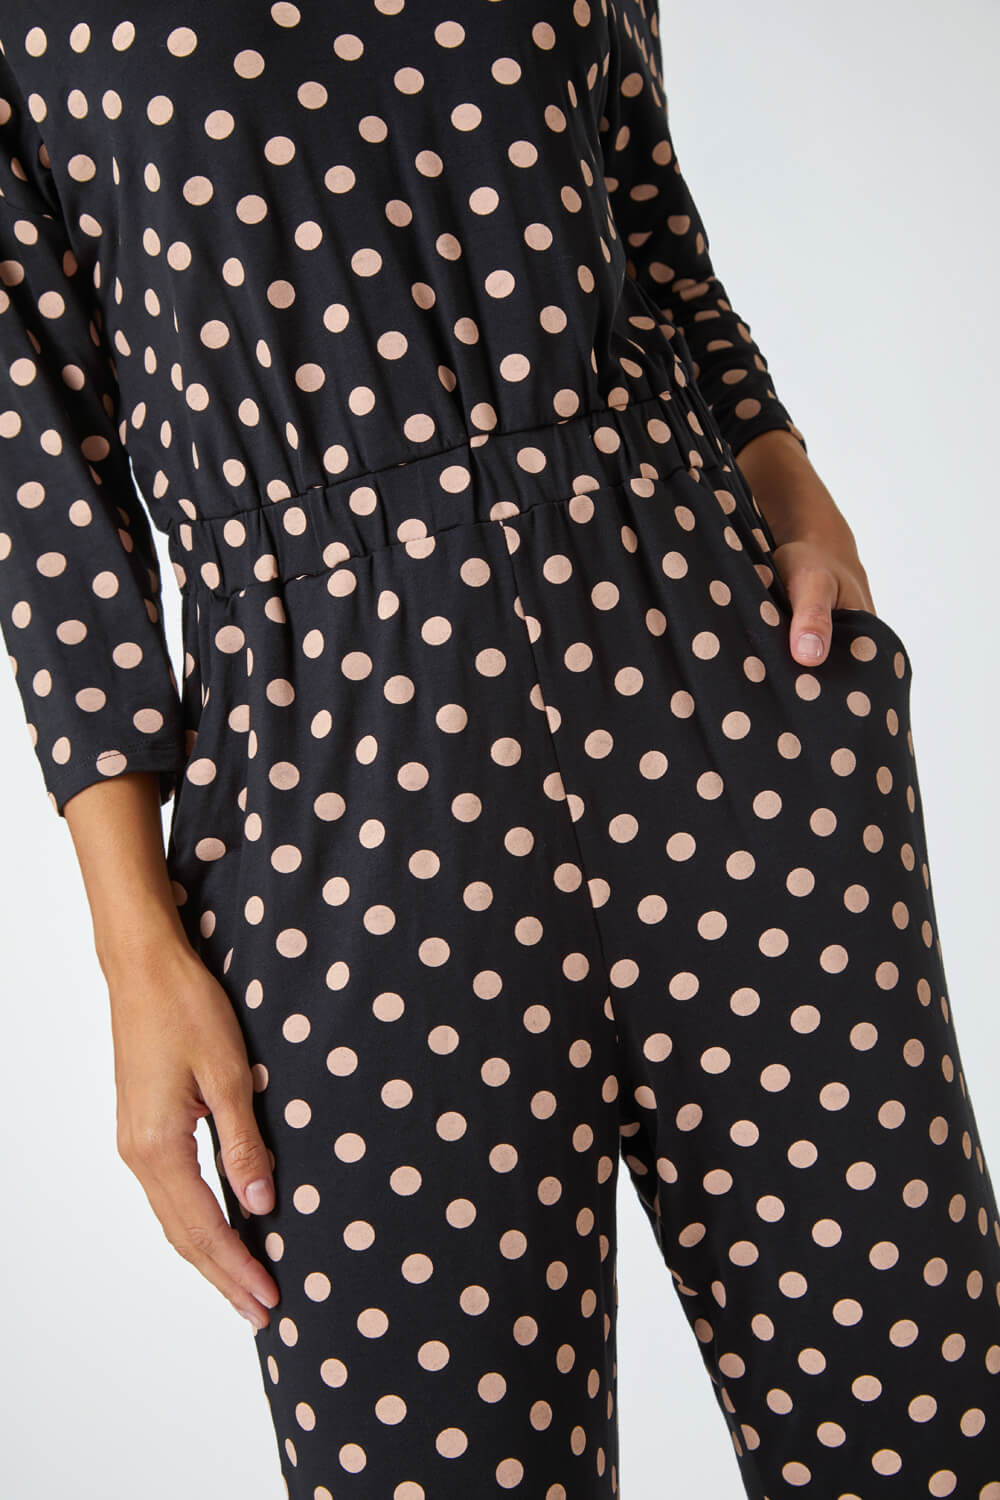 Black Polka Dot Print Stretch Jumpsuit, Image 5 of 5